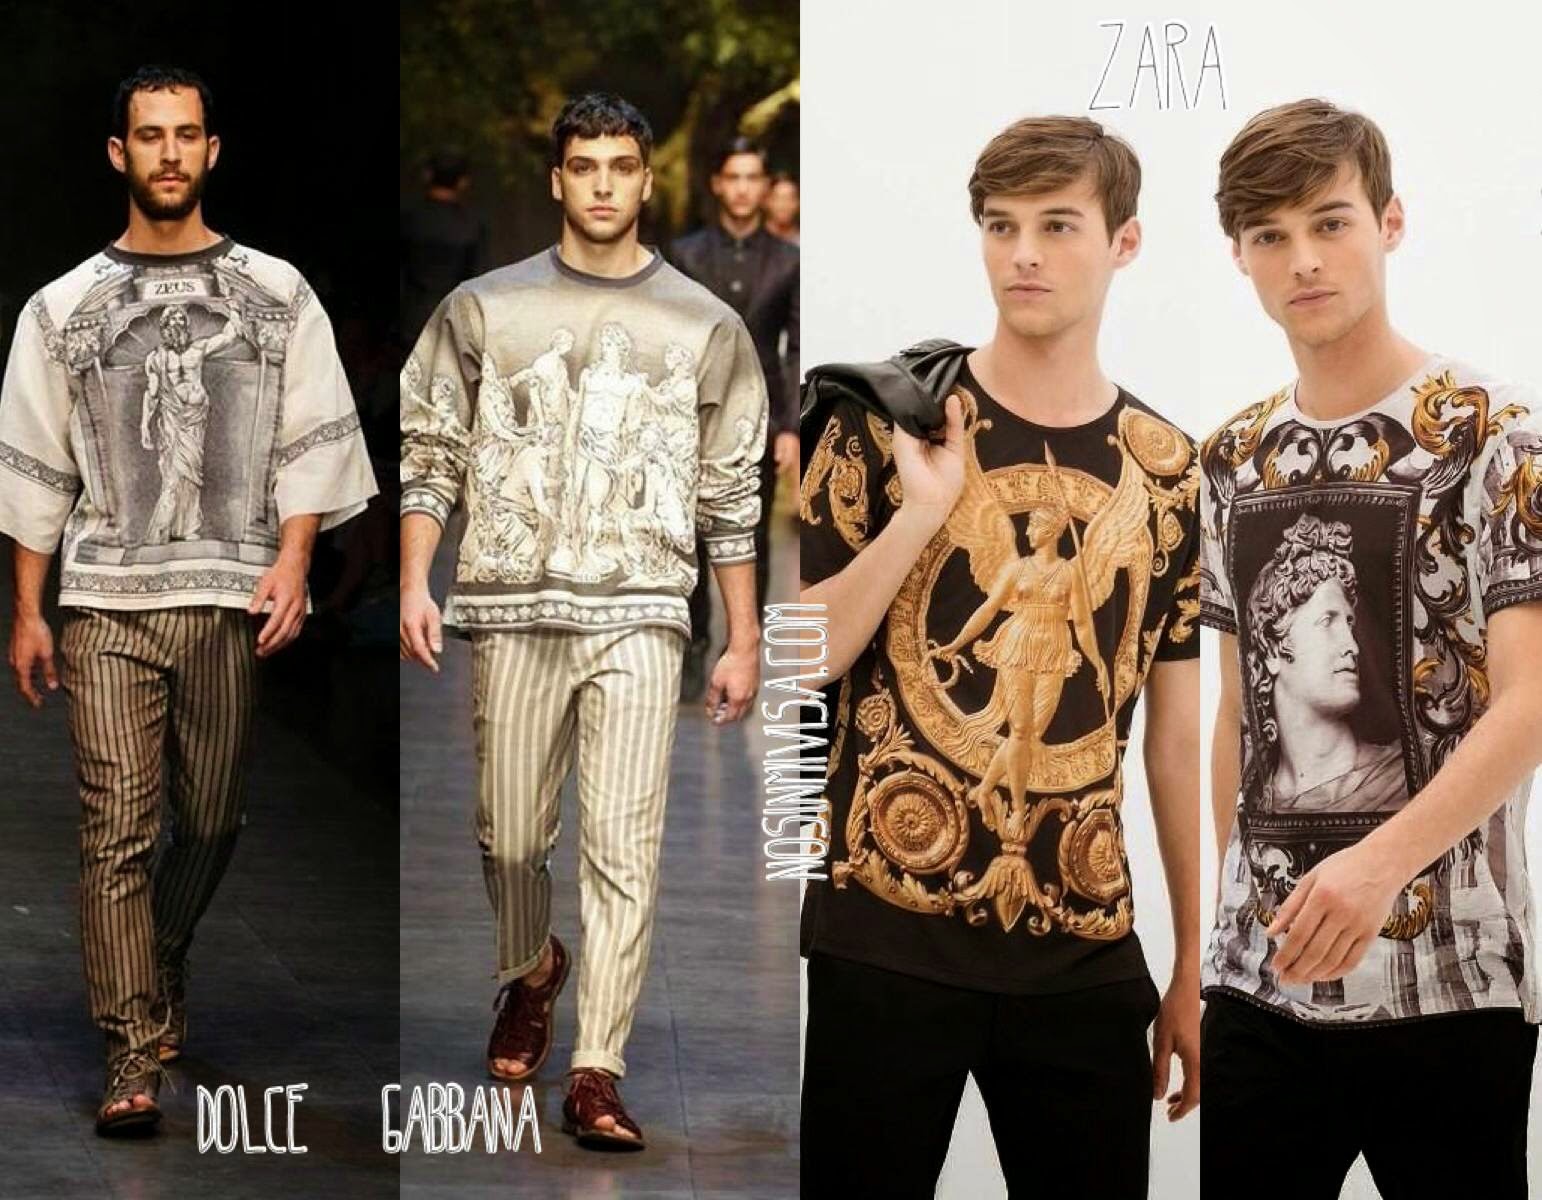 Clones | Dolce&Gabbana Vs. Zara | Belleza